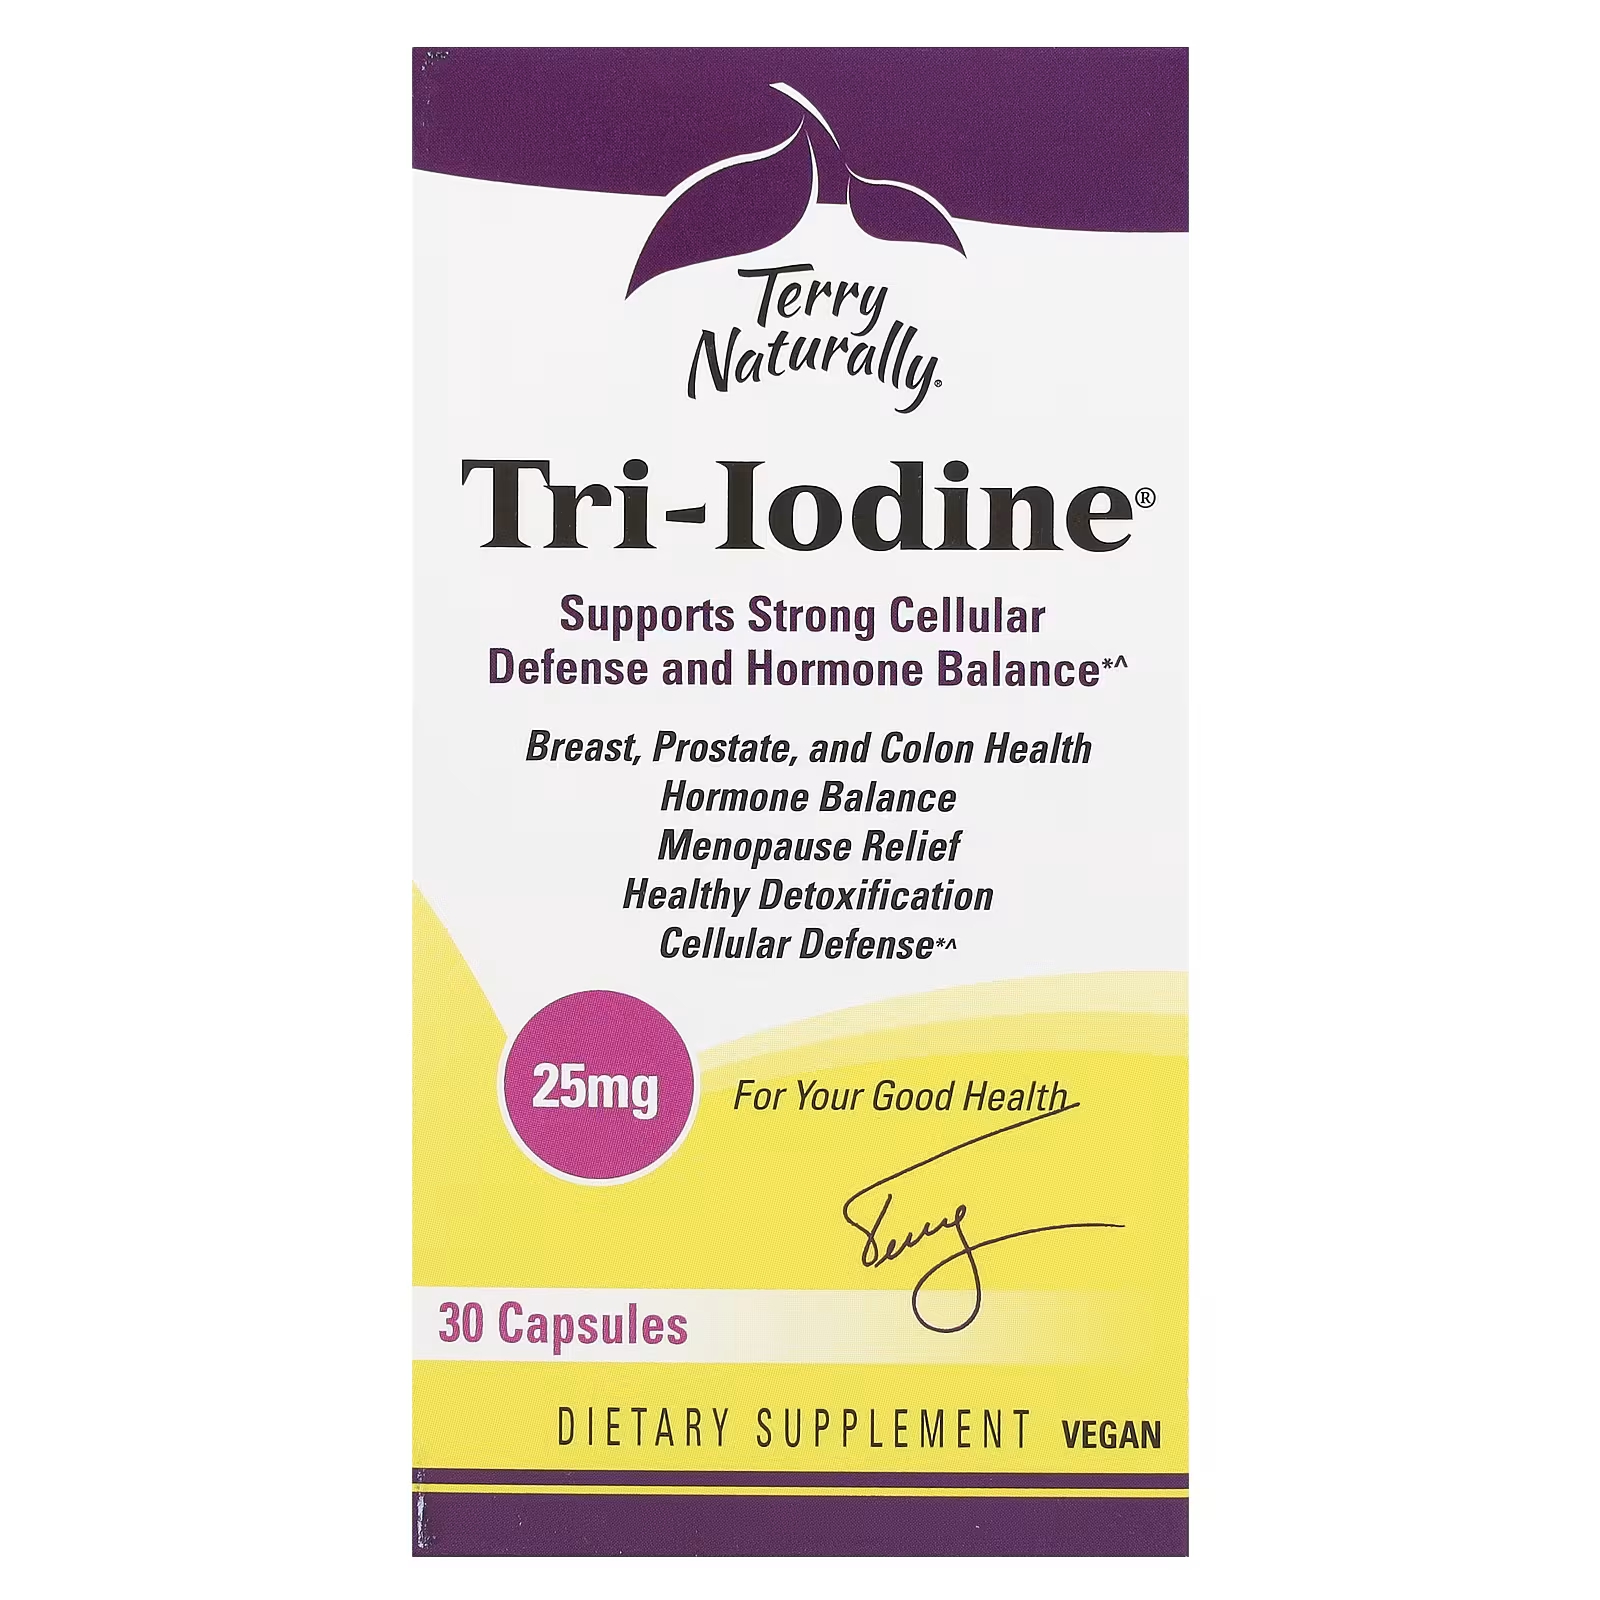 Пищевая добавка Terry Naturally Tri-Iodine для здоровья, 30 капсул калия йодид renewal таб 100мкг n112